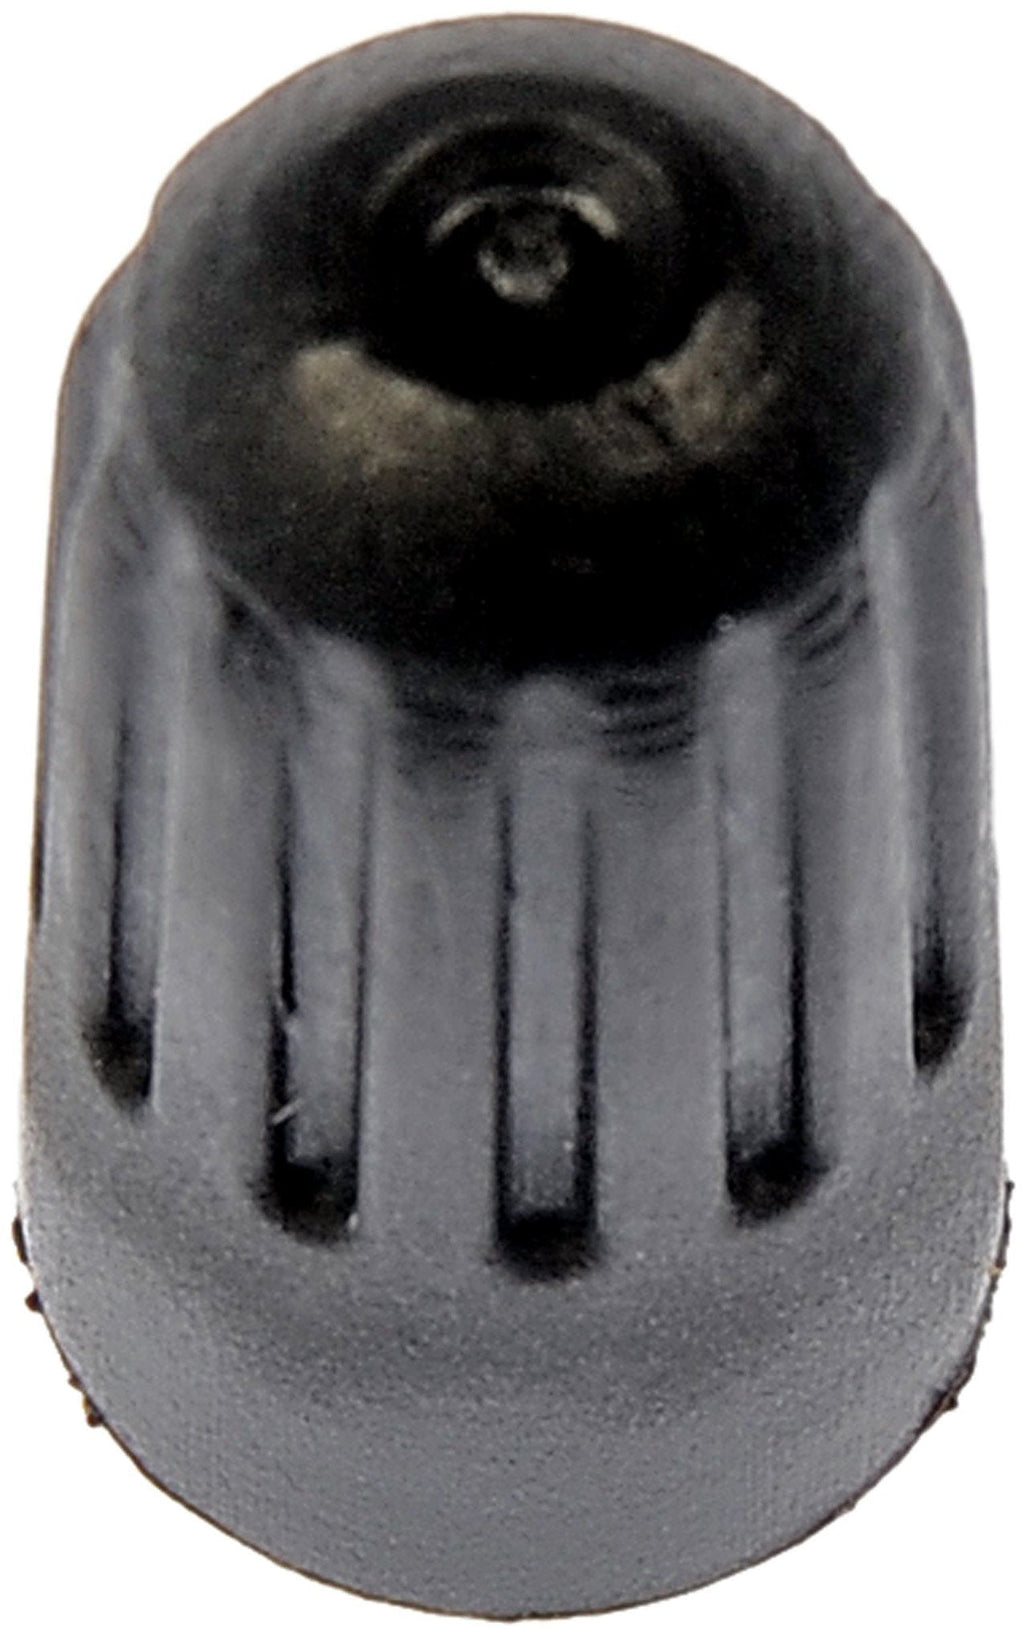  [AUSTRALIA] - Dorman 609-154 TPMS Long Black Plastic Sealing Valve Stem Cap, Pack of 50